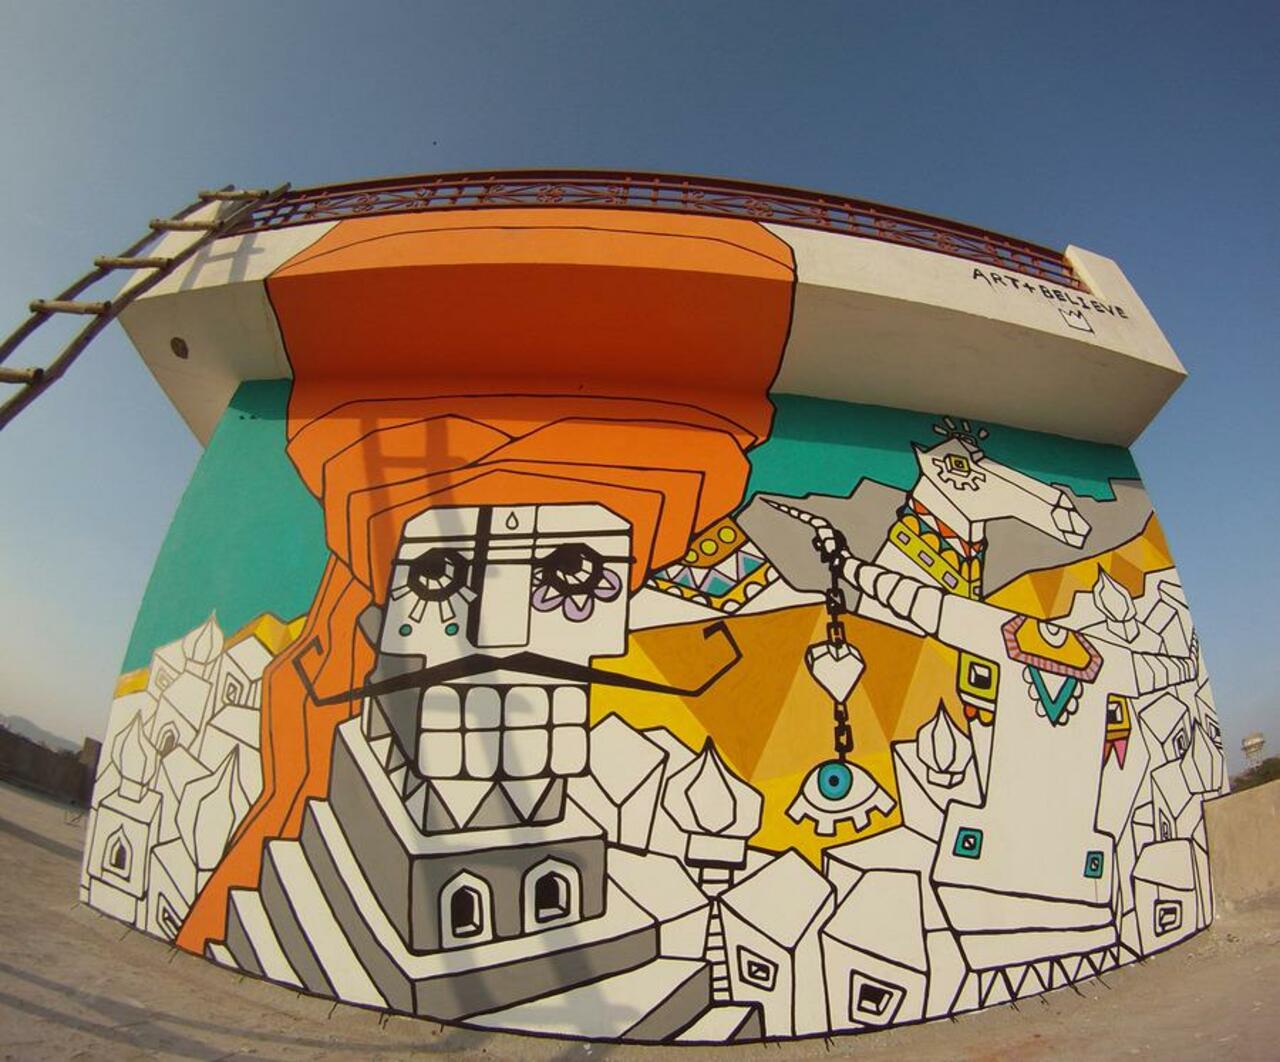 Streetart by ART + BELIEVE in Brighton (United Kingdom)
Via @globalstreetart 
#streetart #mural #art #graffiti http://t.co/h8moq6kVr1